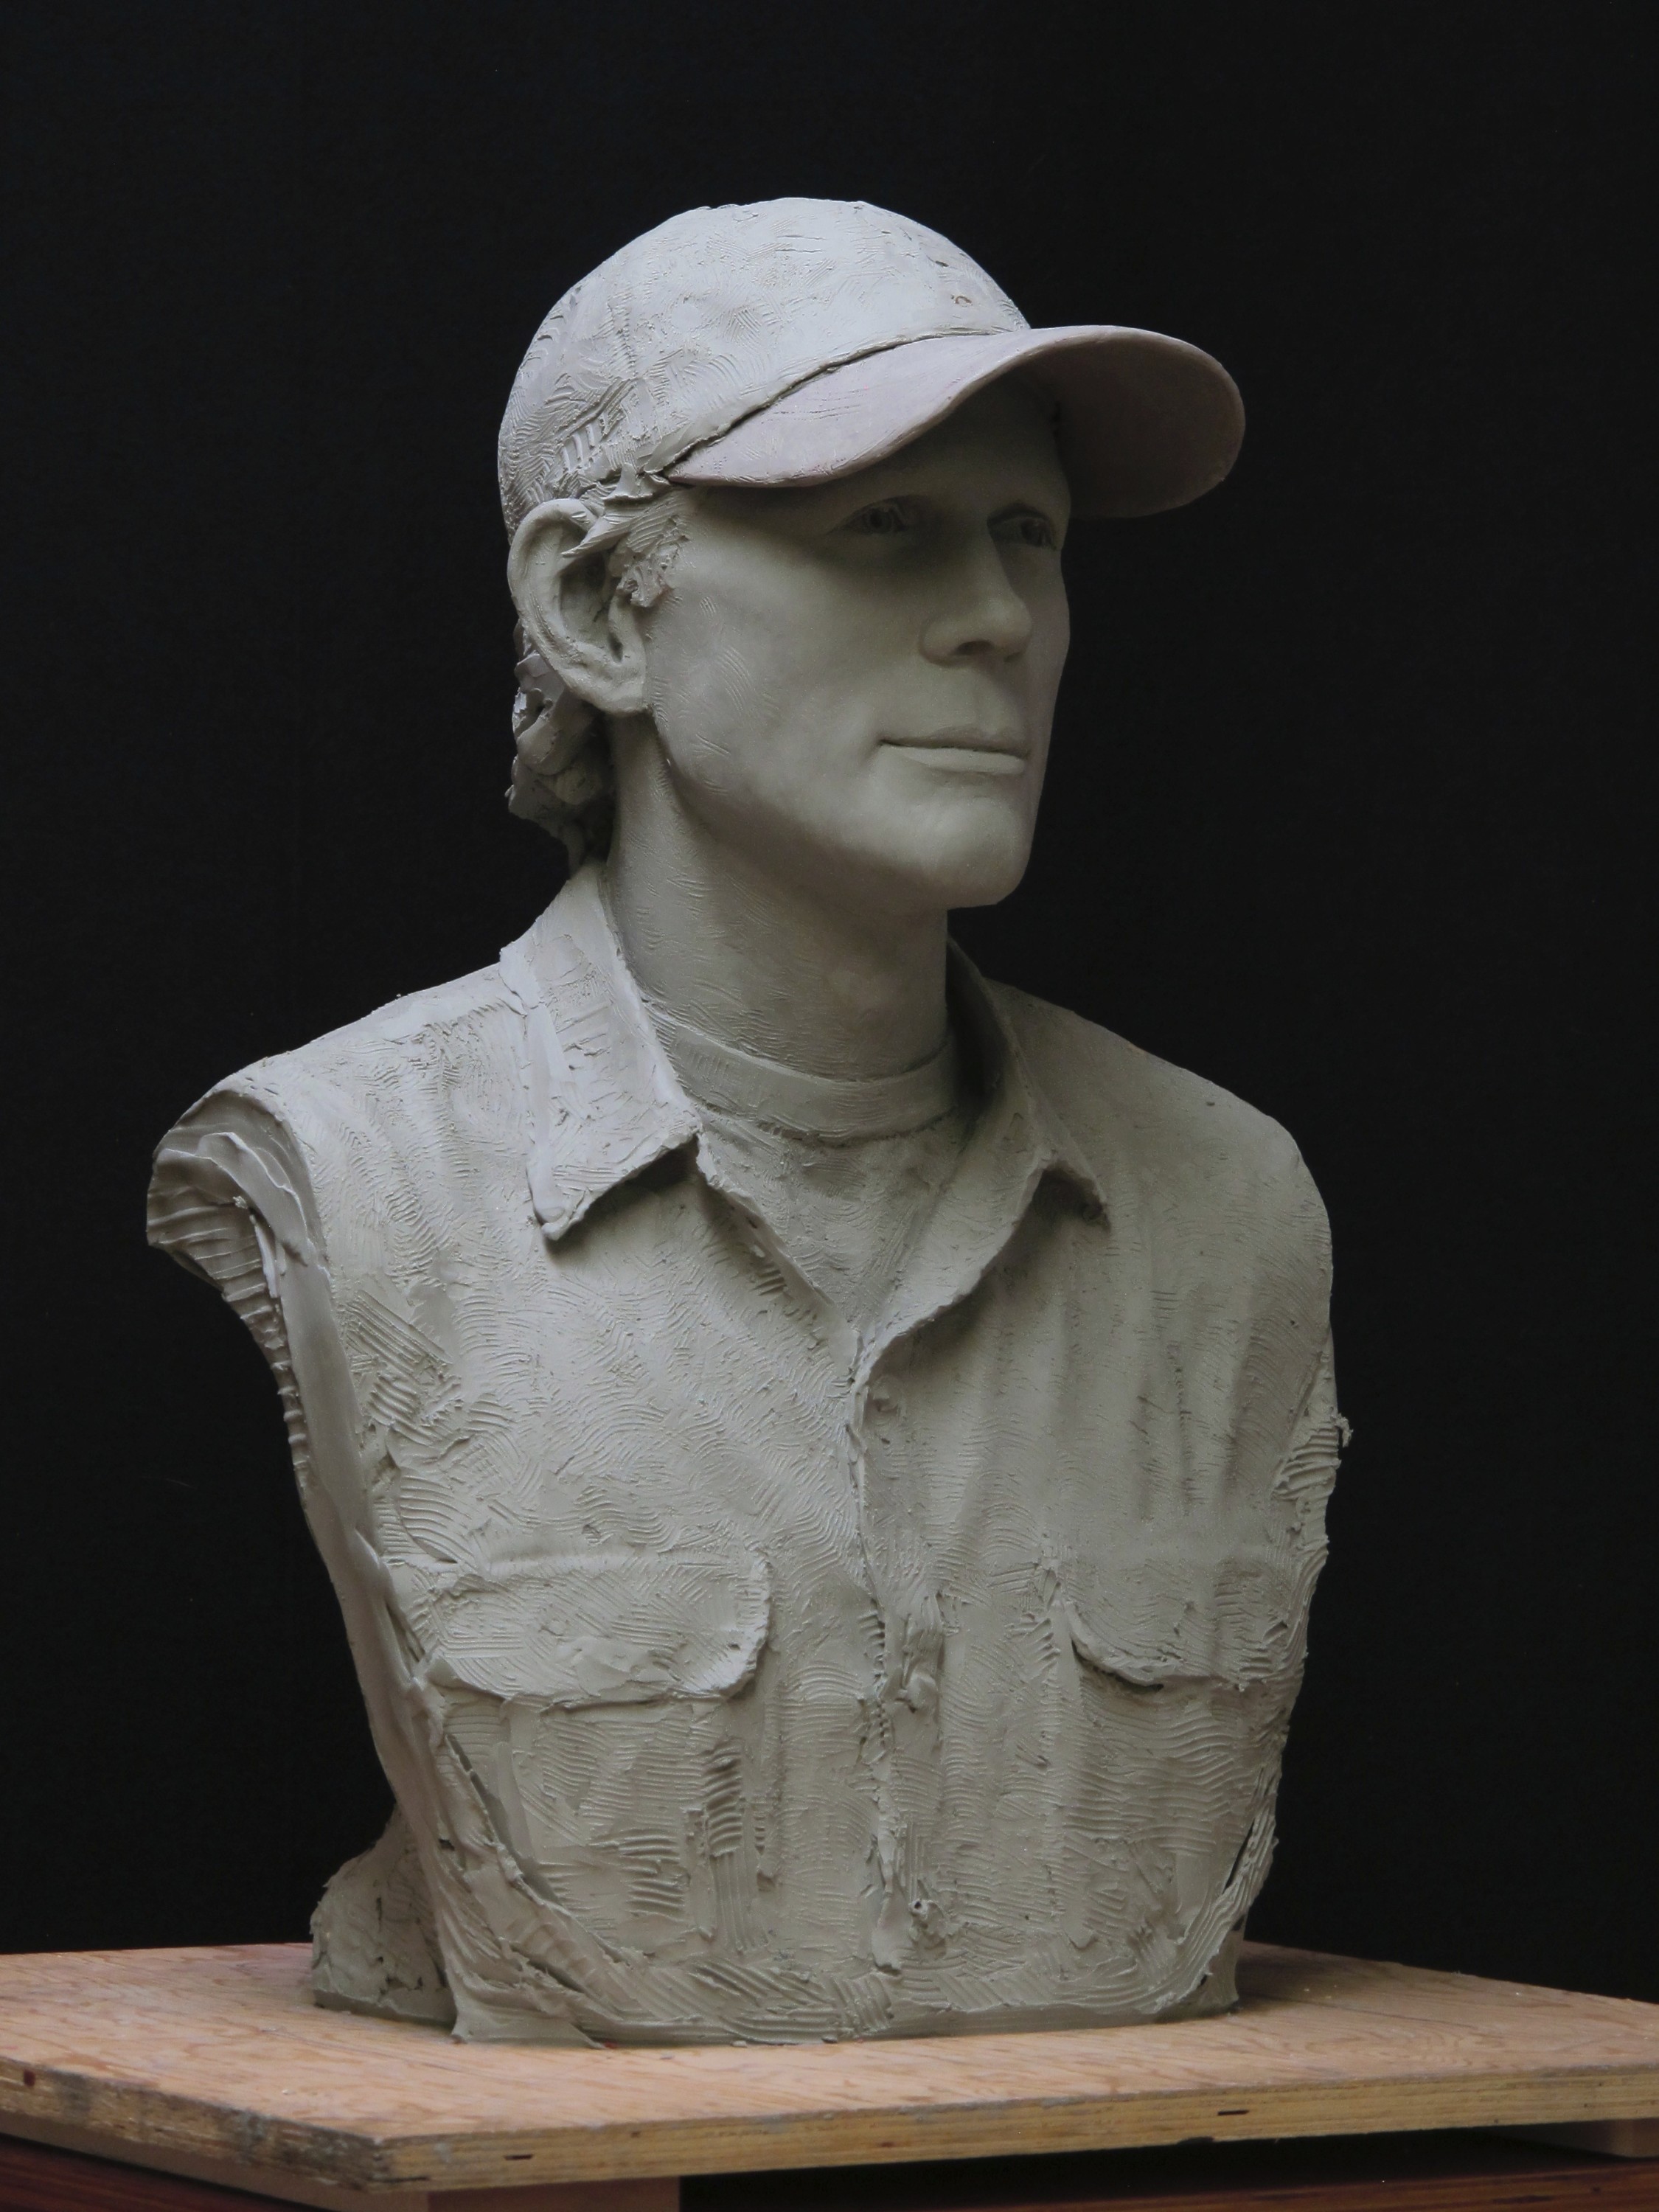 Clay sculpt of Ron Howards TV academy bust